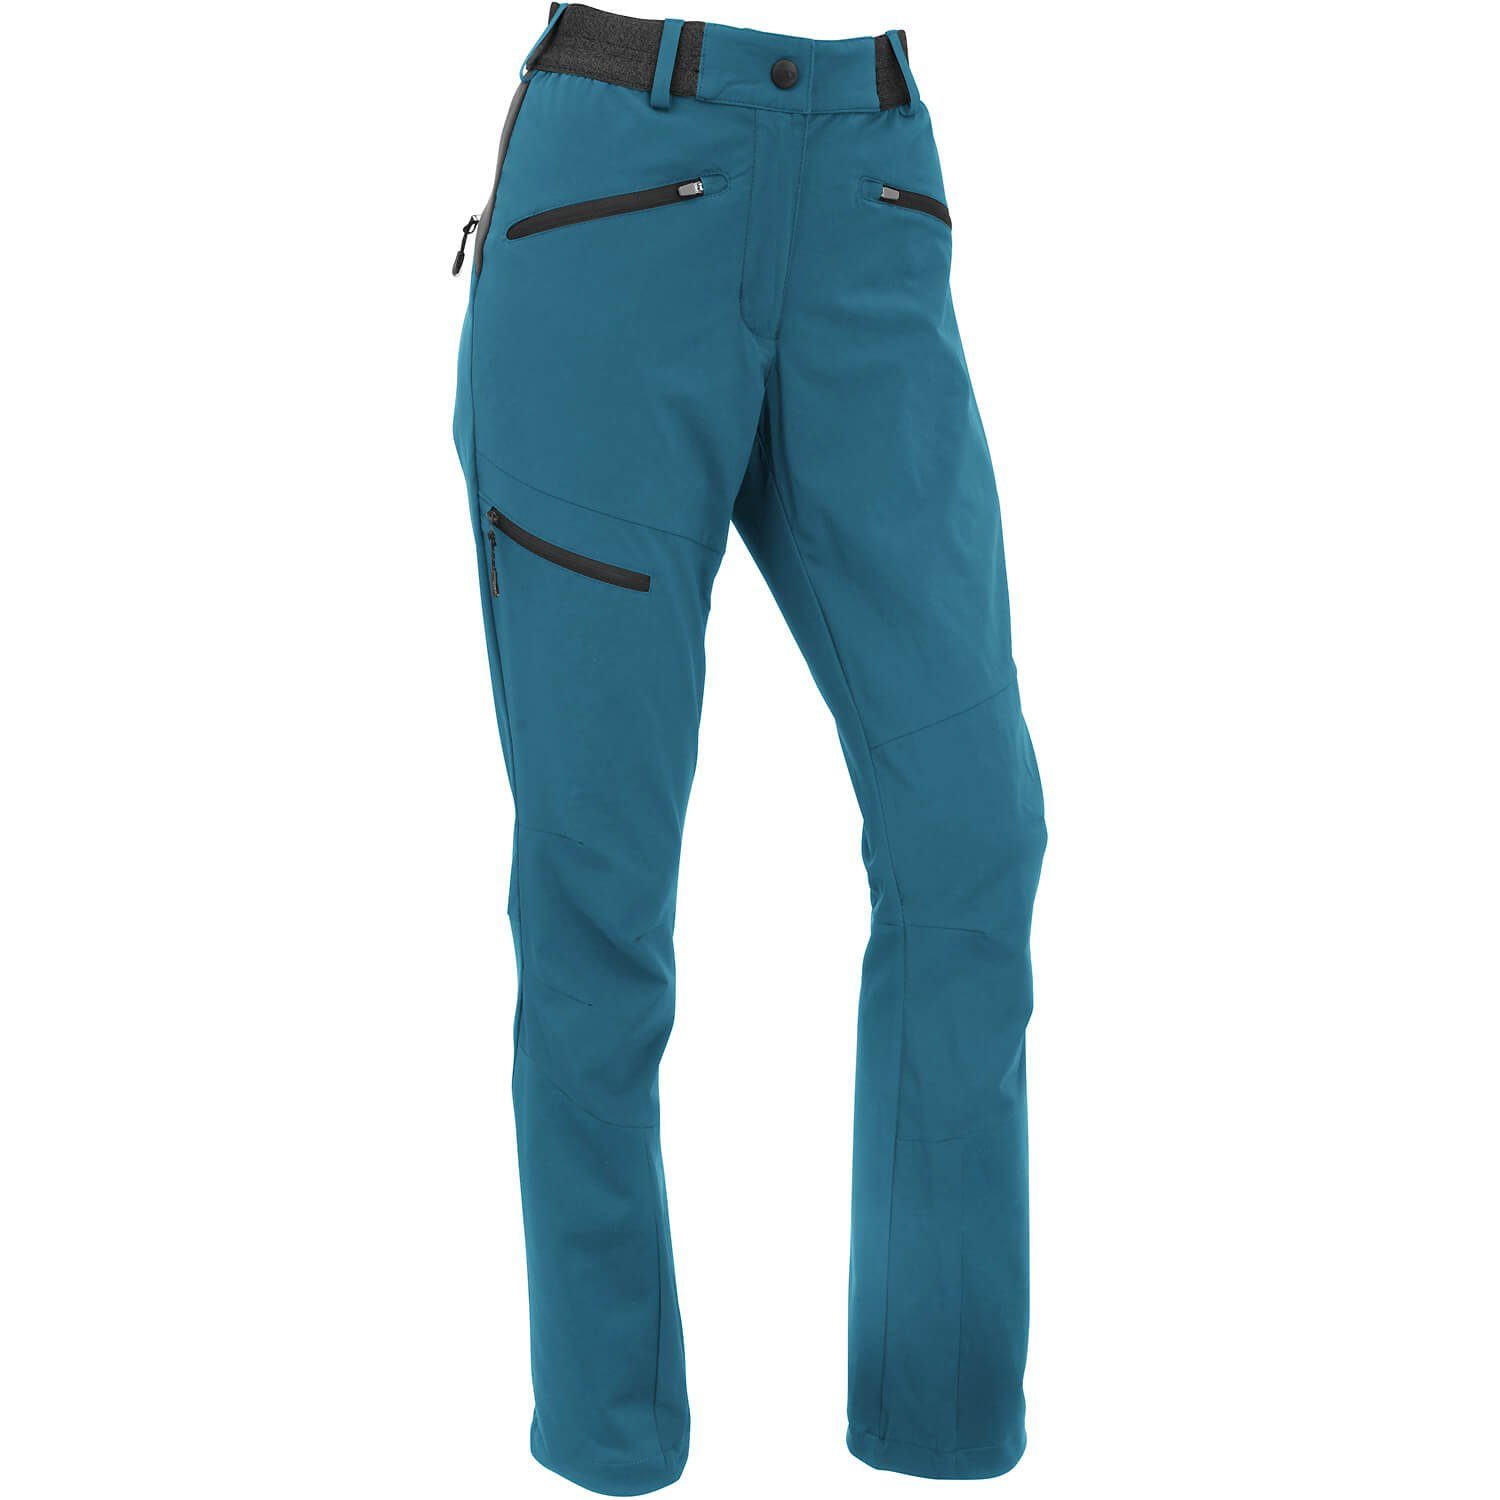 Maul Sport® Funktionshose Trekkinghose Arco Ultralight Blau